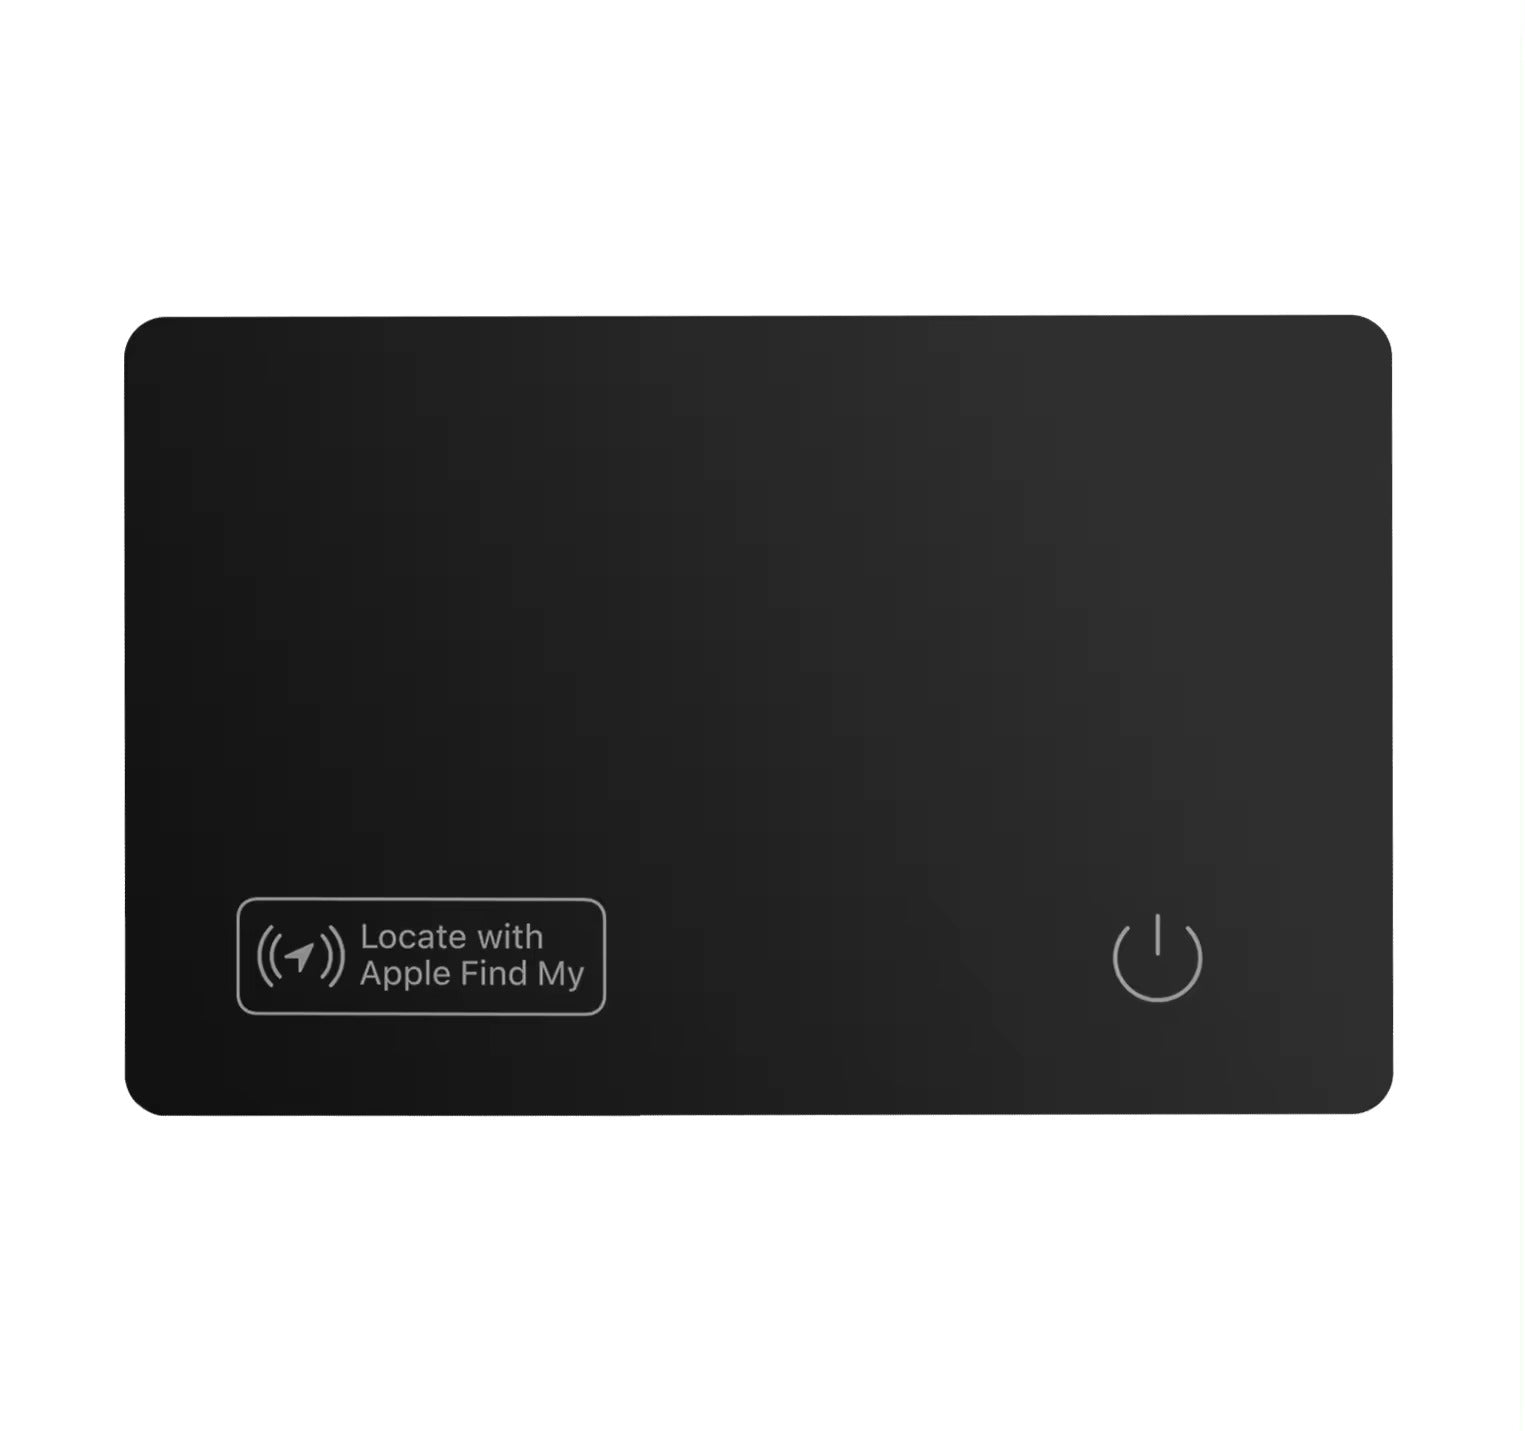 Auriglo smart card tracker